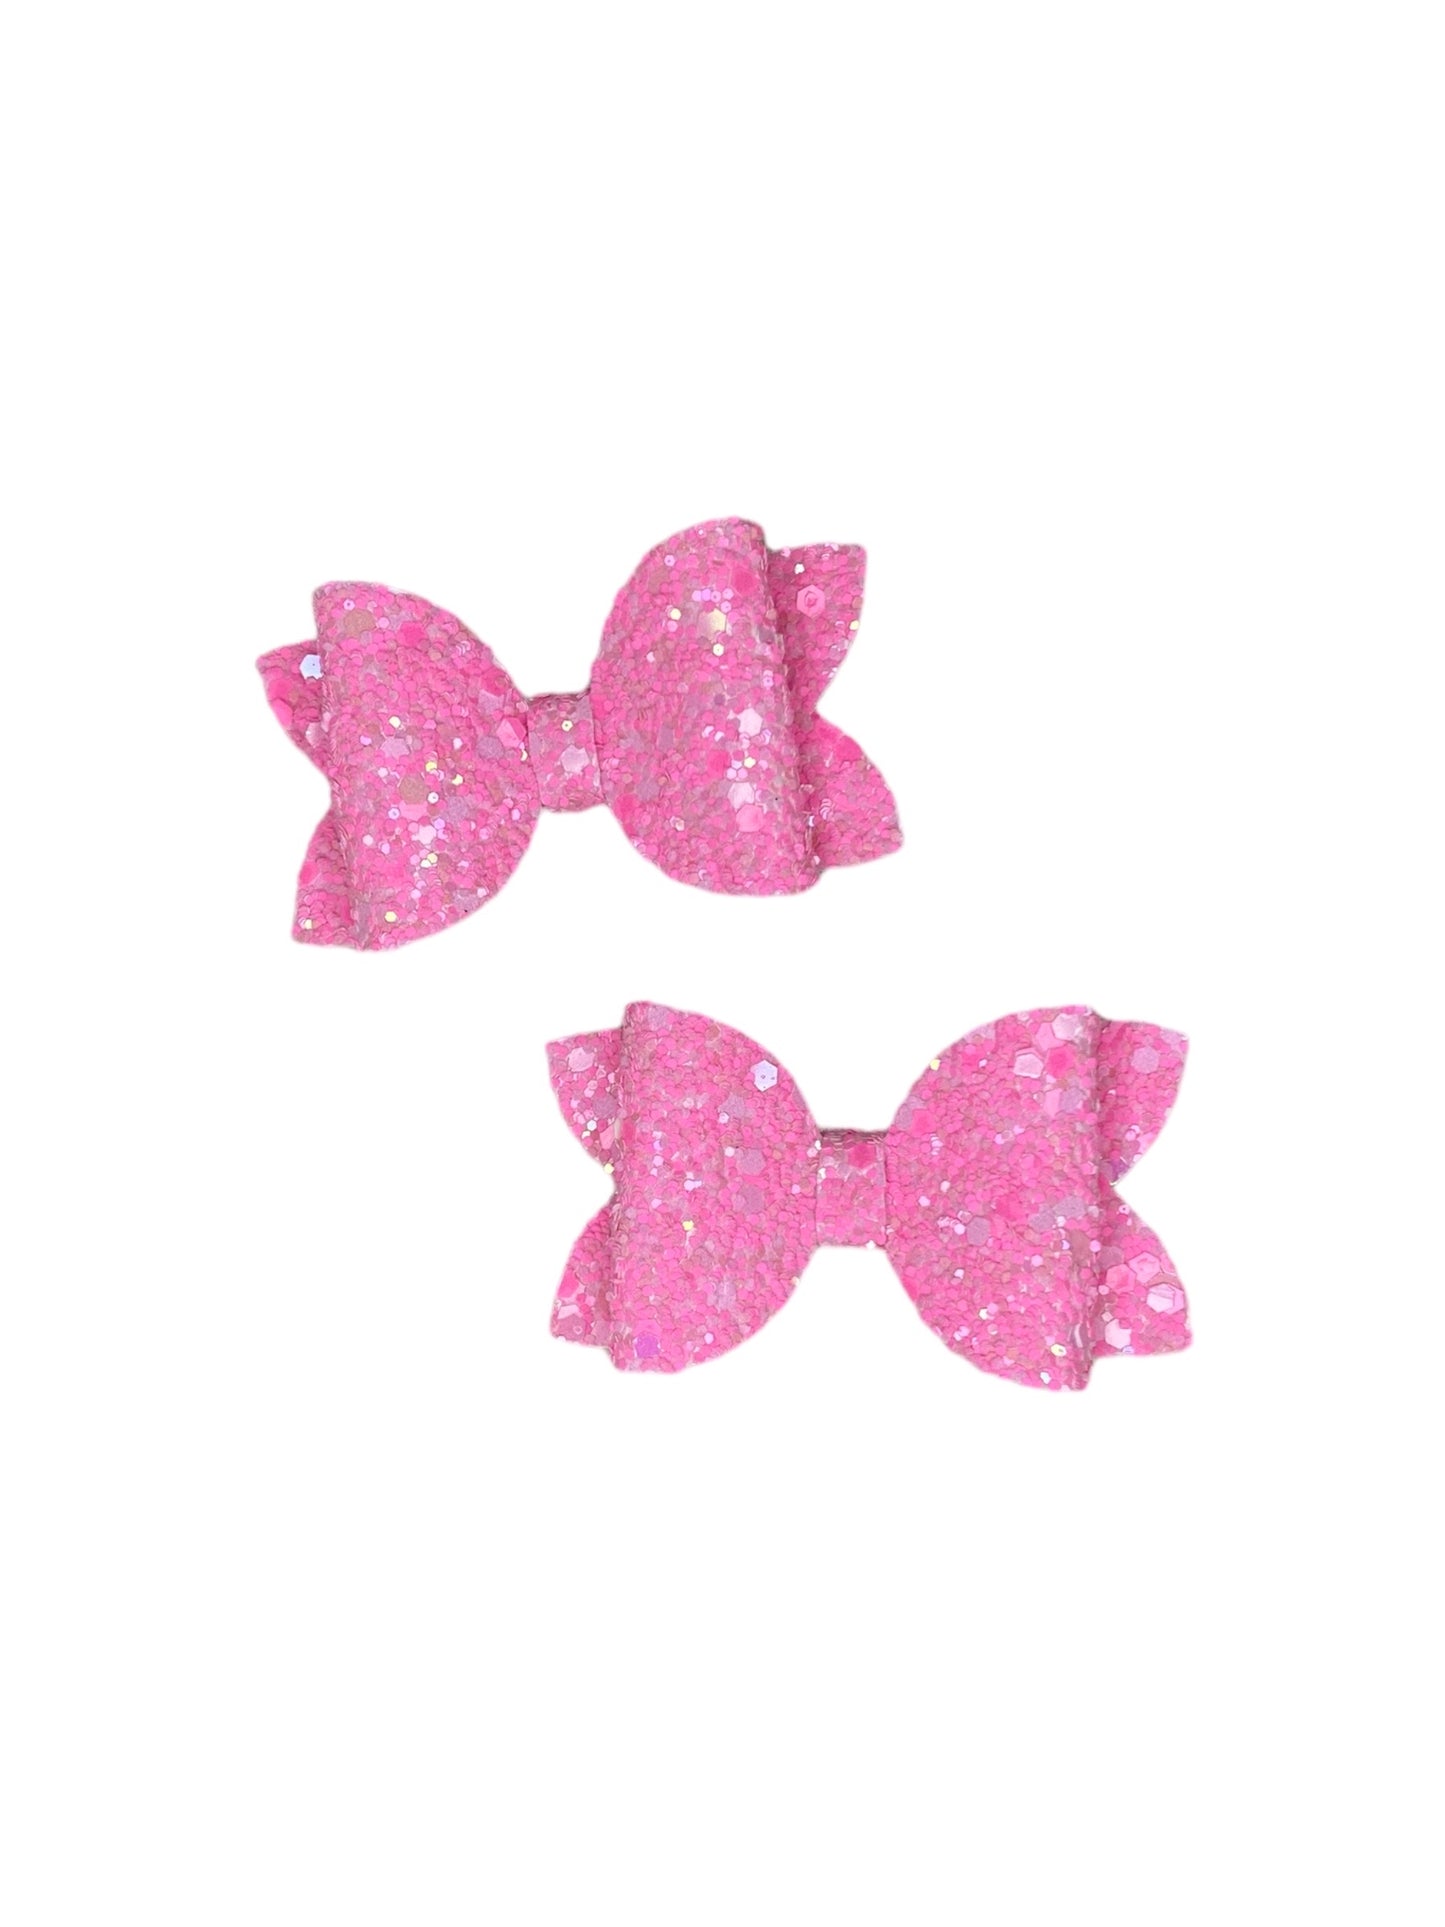 Bubblegum Pink Glitter Pigtail Bows!